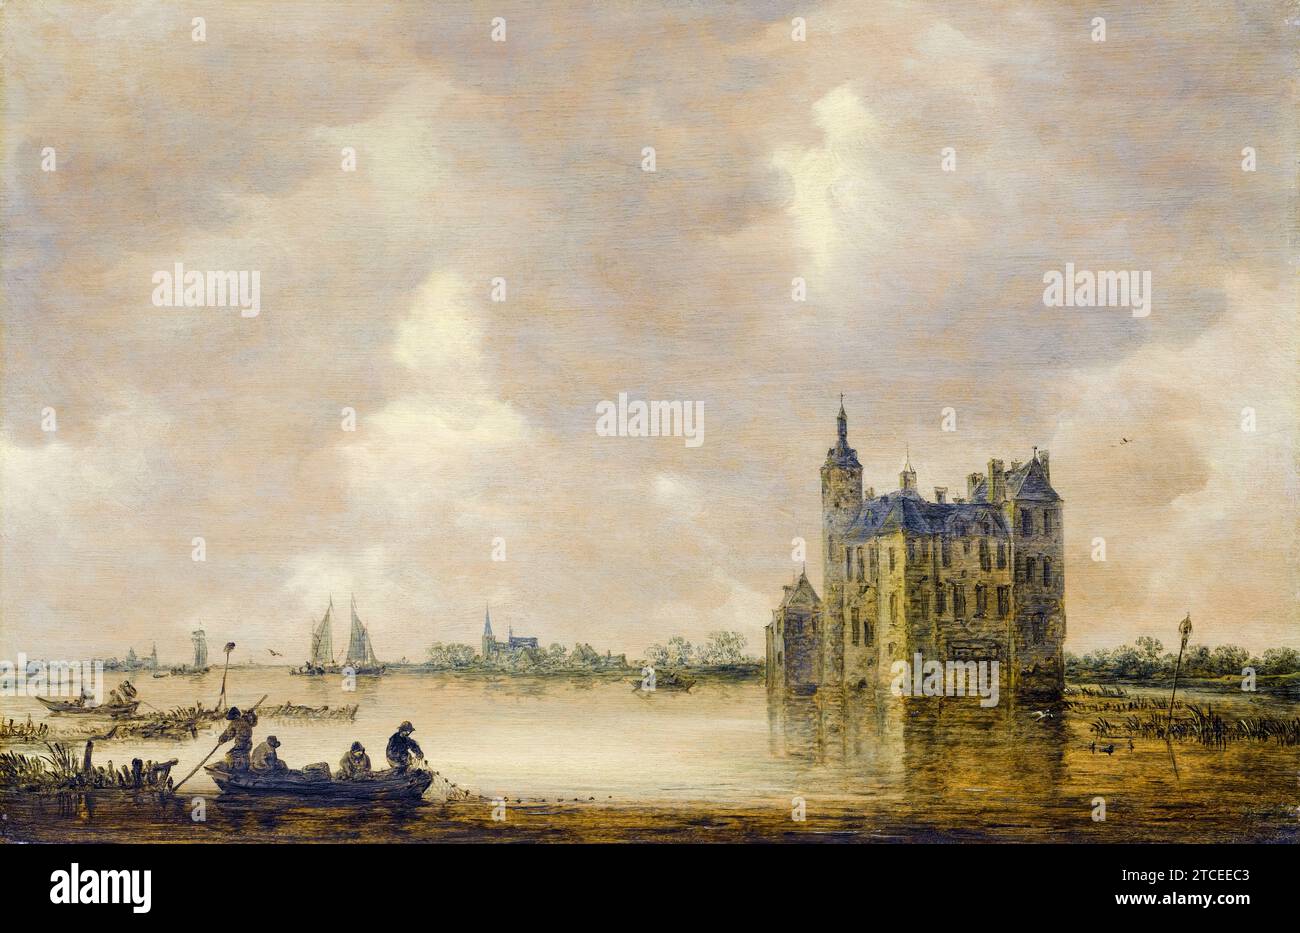 Jan van Goyen, A Castle by a River, landscape painting in oil on panel, 1647 Stock Photo